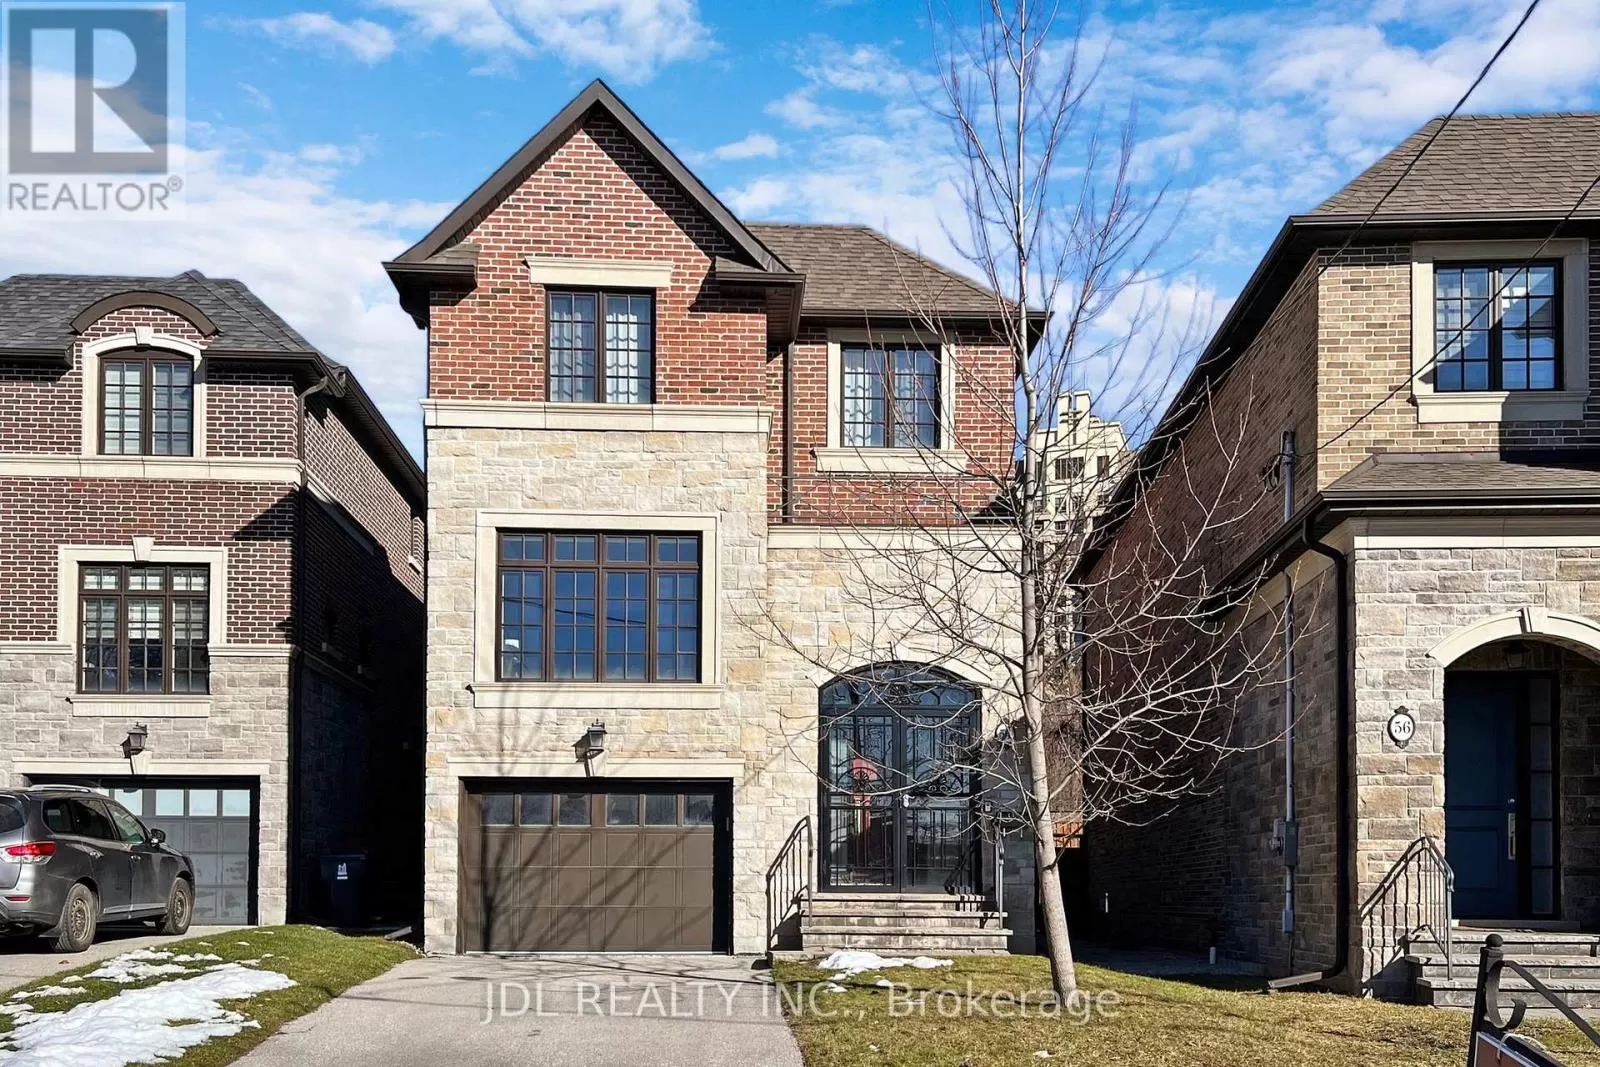 House for rent: 54 Granlea Road, Toronto, Ontario M2N 2Z5